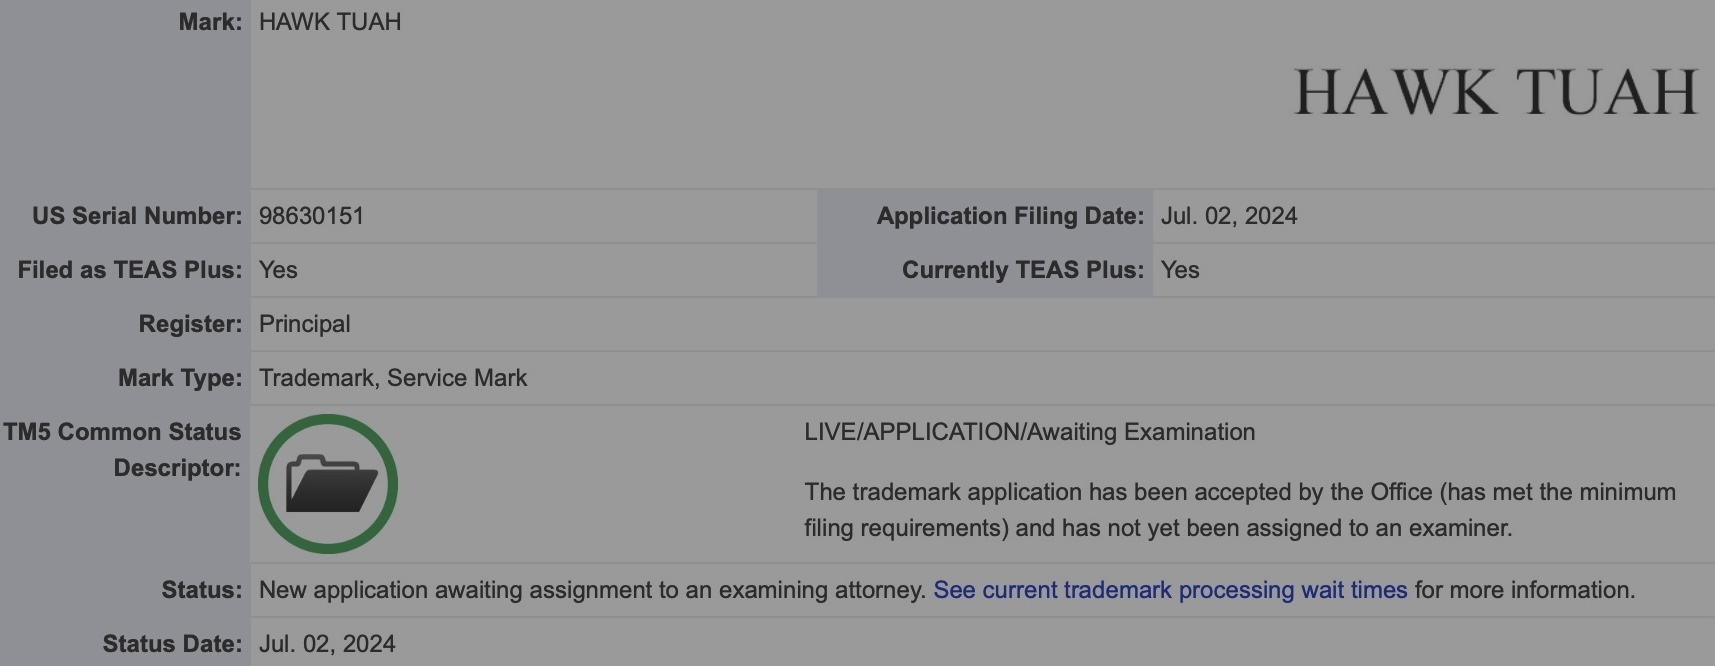 Hawk Tuah Trademark Application